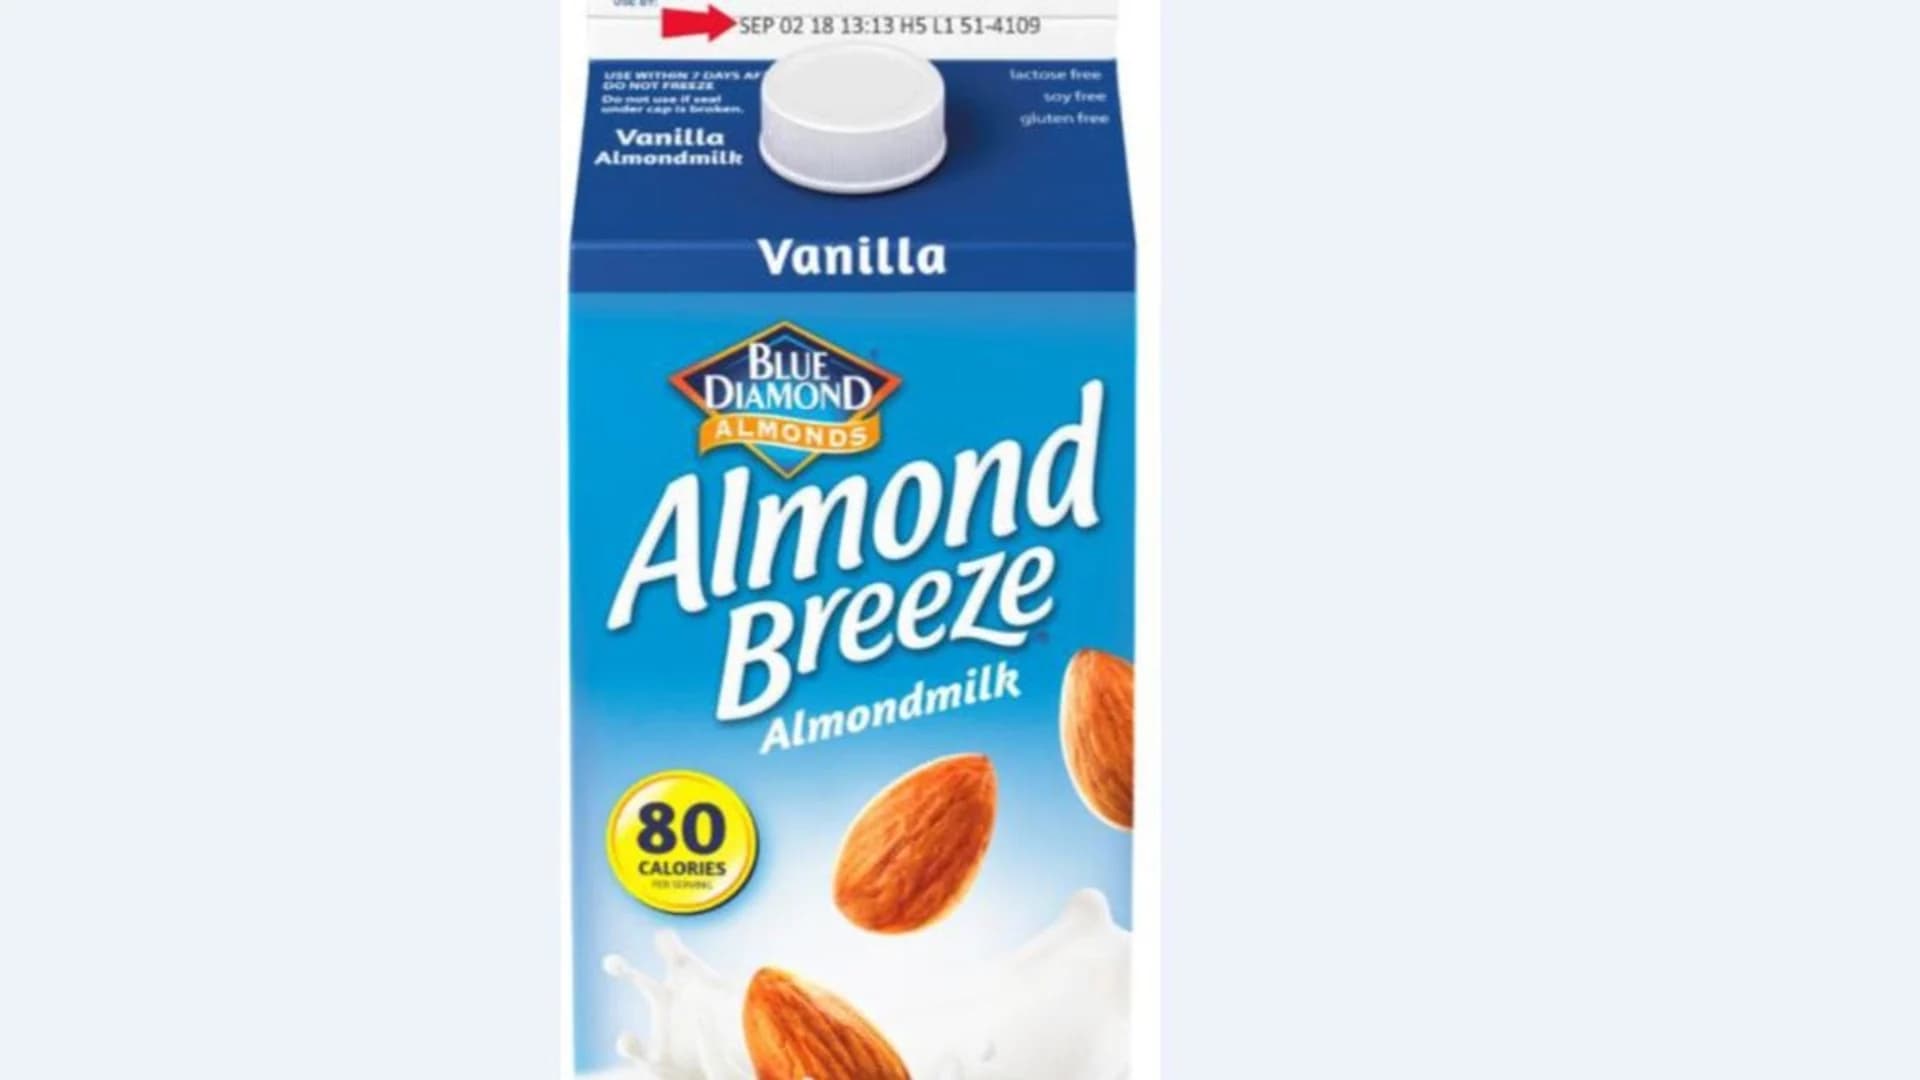 Company recalls Vanilla Almond Breeze almond milk due to possible milk allergen